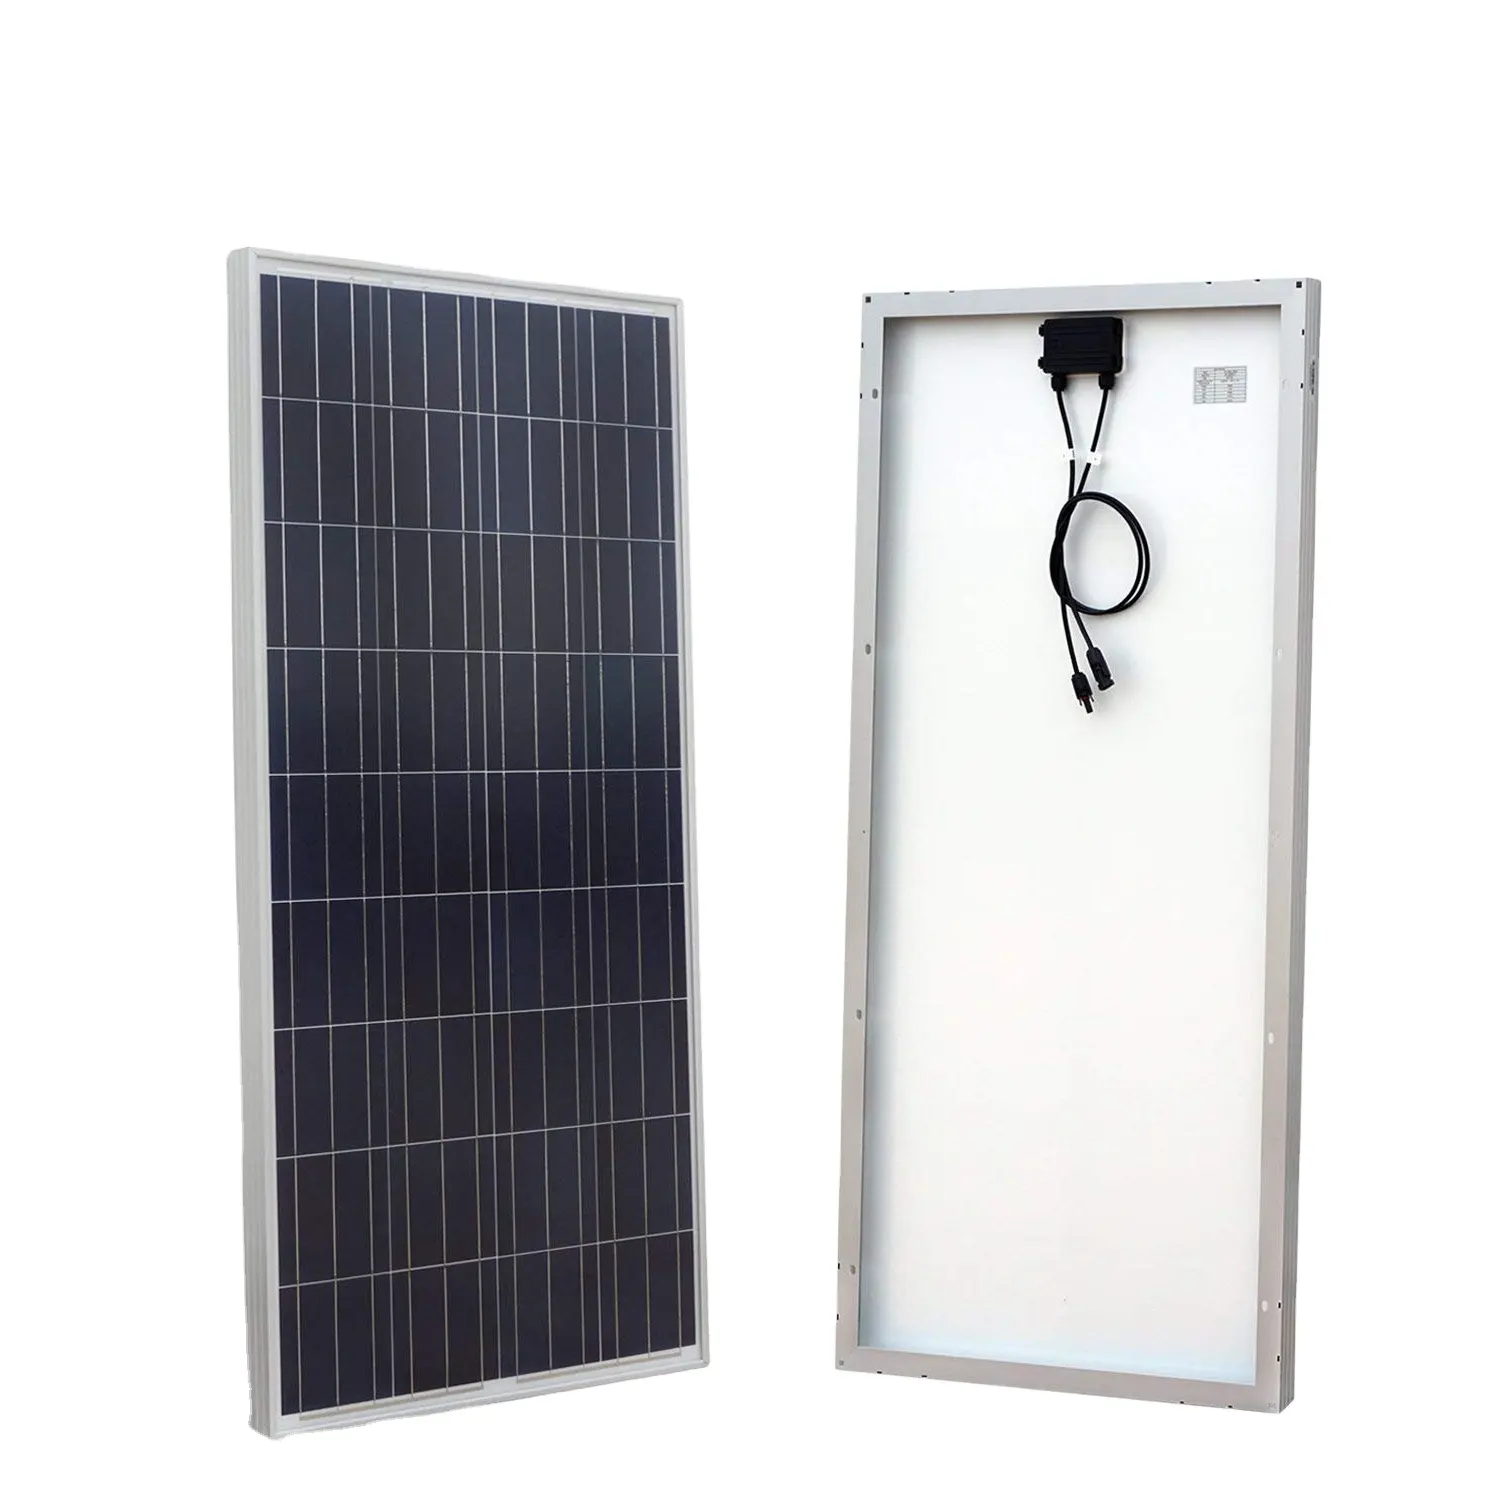 Painel solar fotovoltaico barato de preço de painel solar de alta eficiência 180w